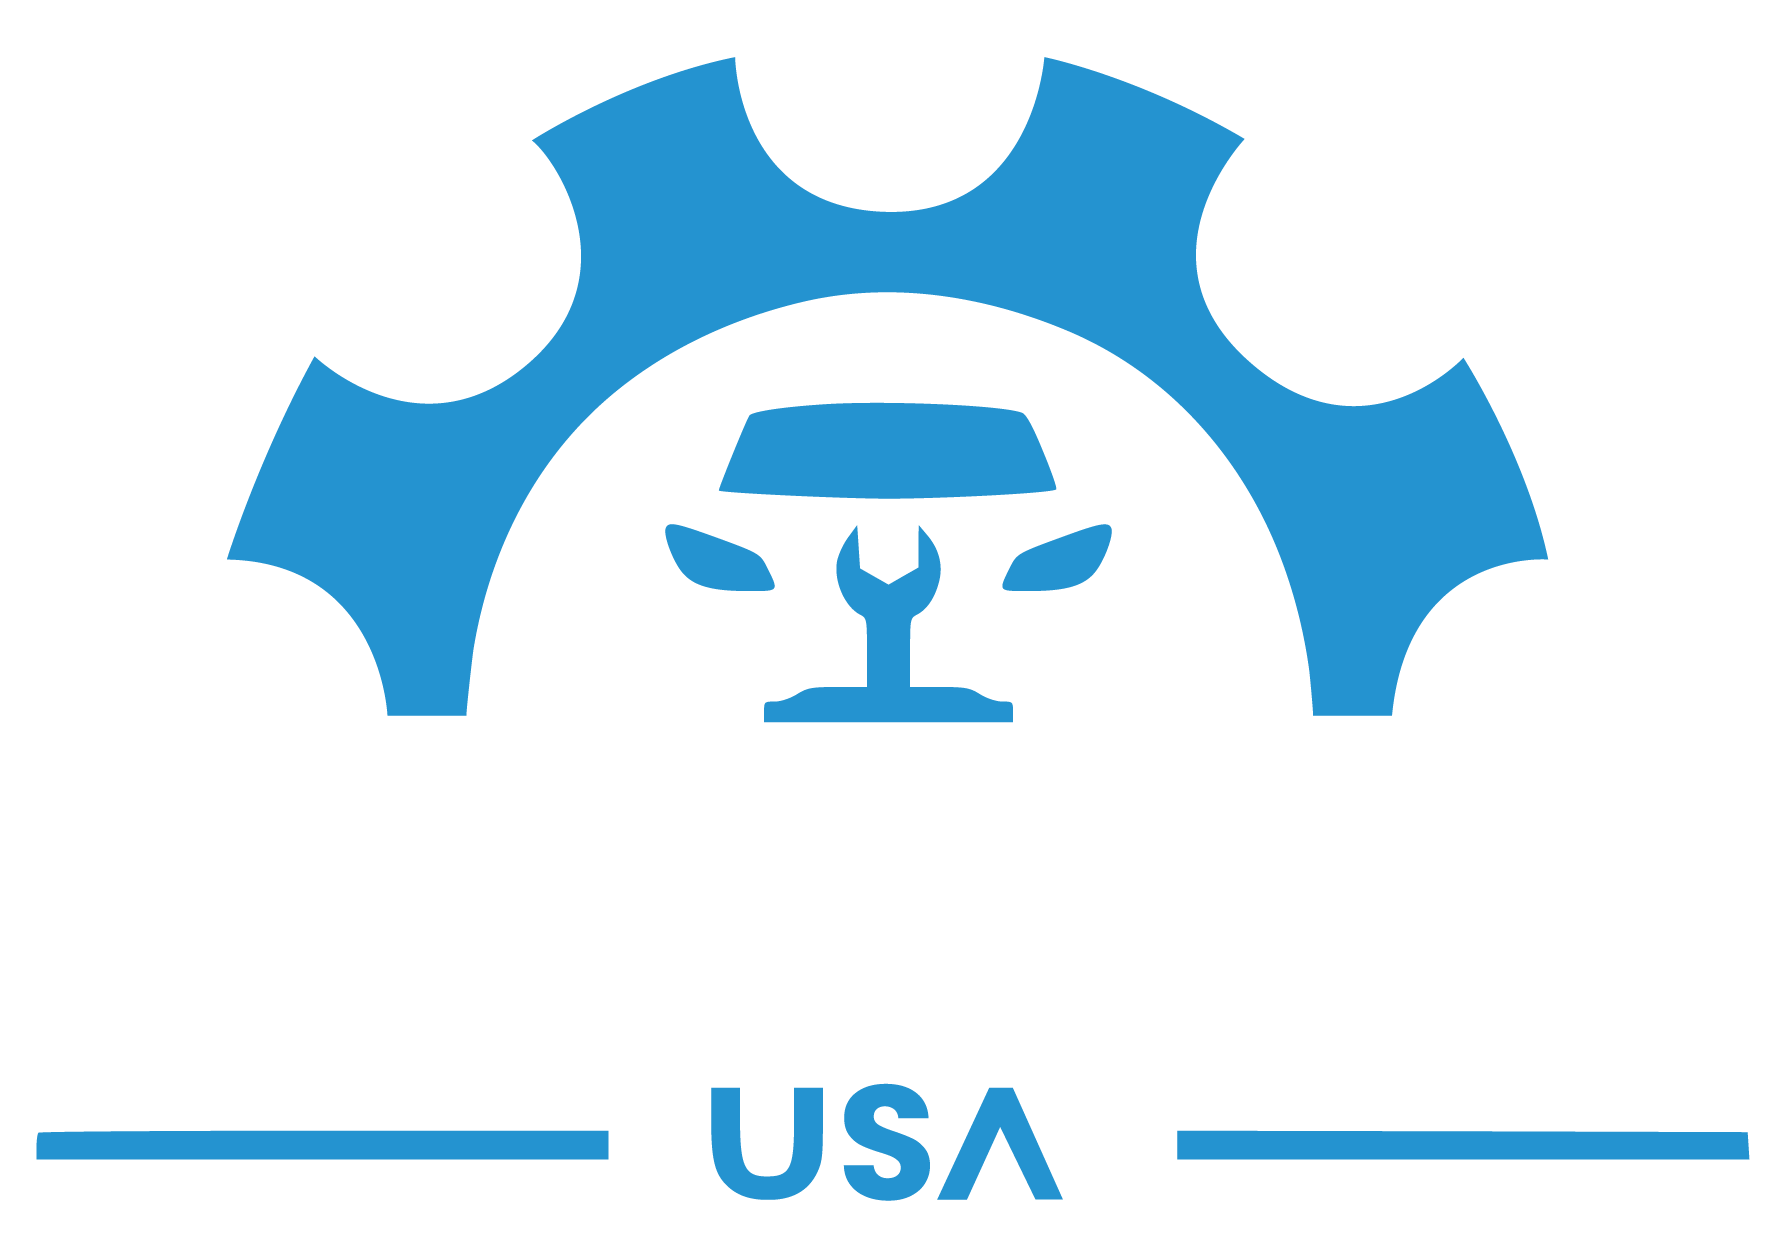 TechForce USA